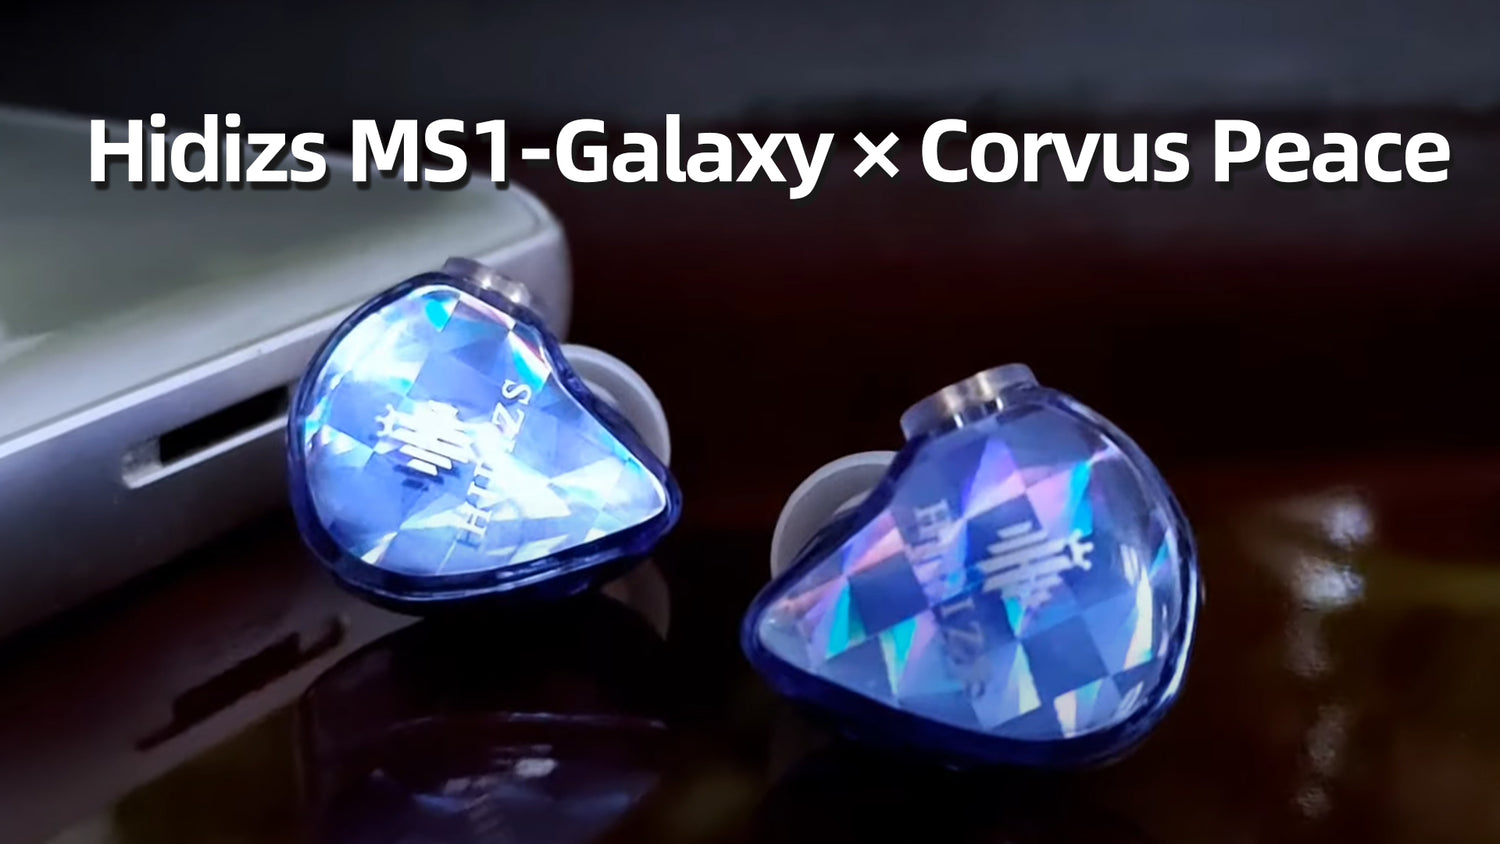 Hidizs MS1-Galaxy Review - Corvus Peace